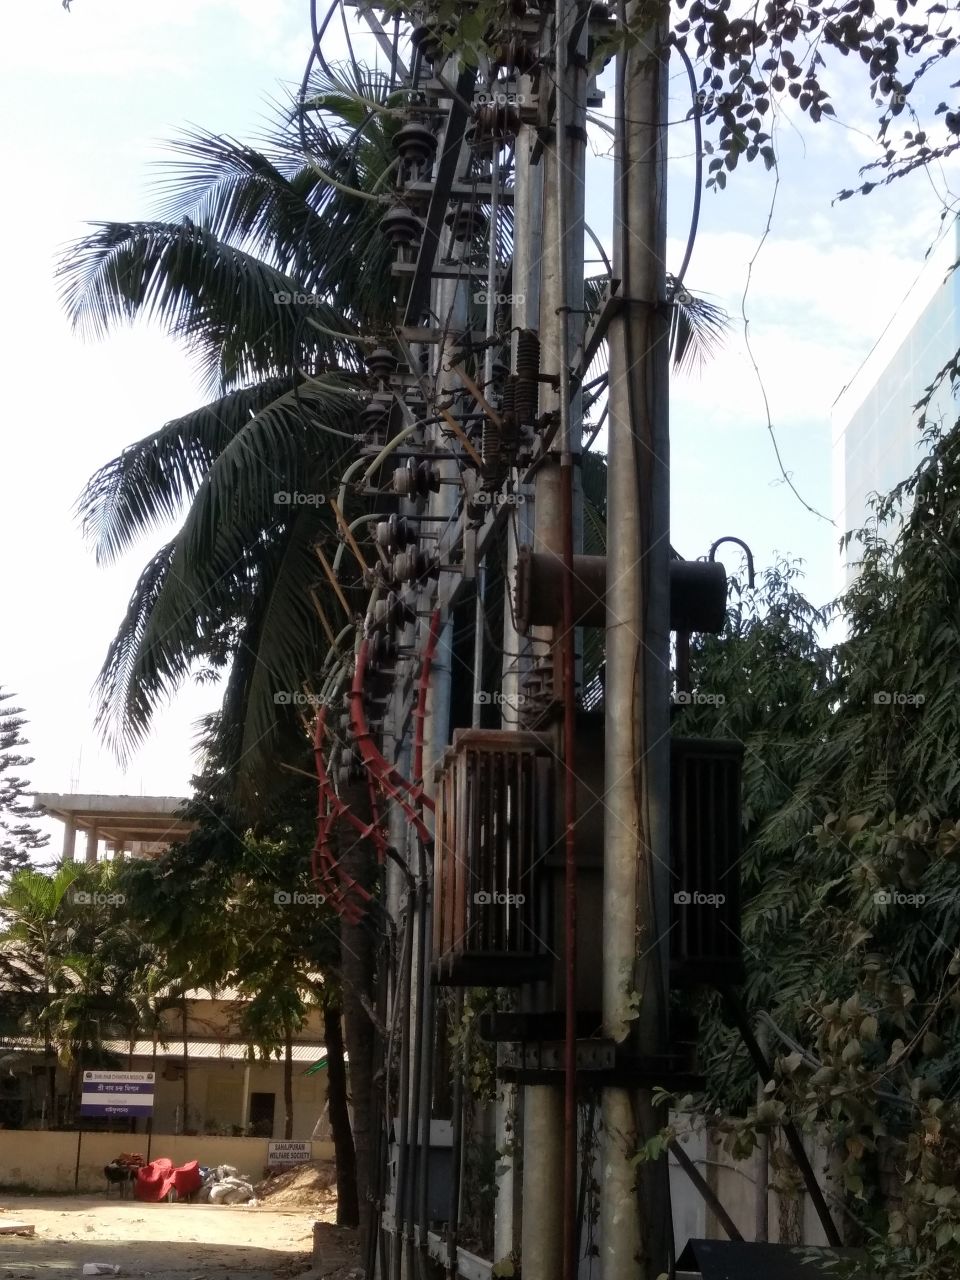 Electric transmission system